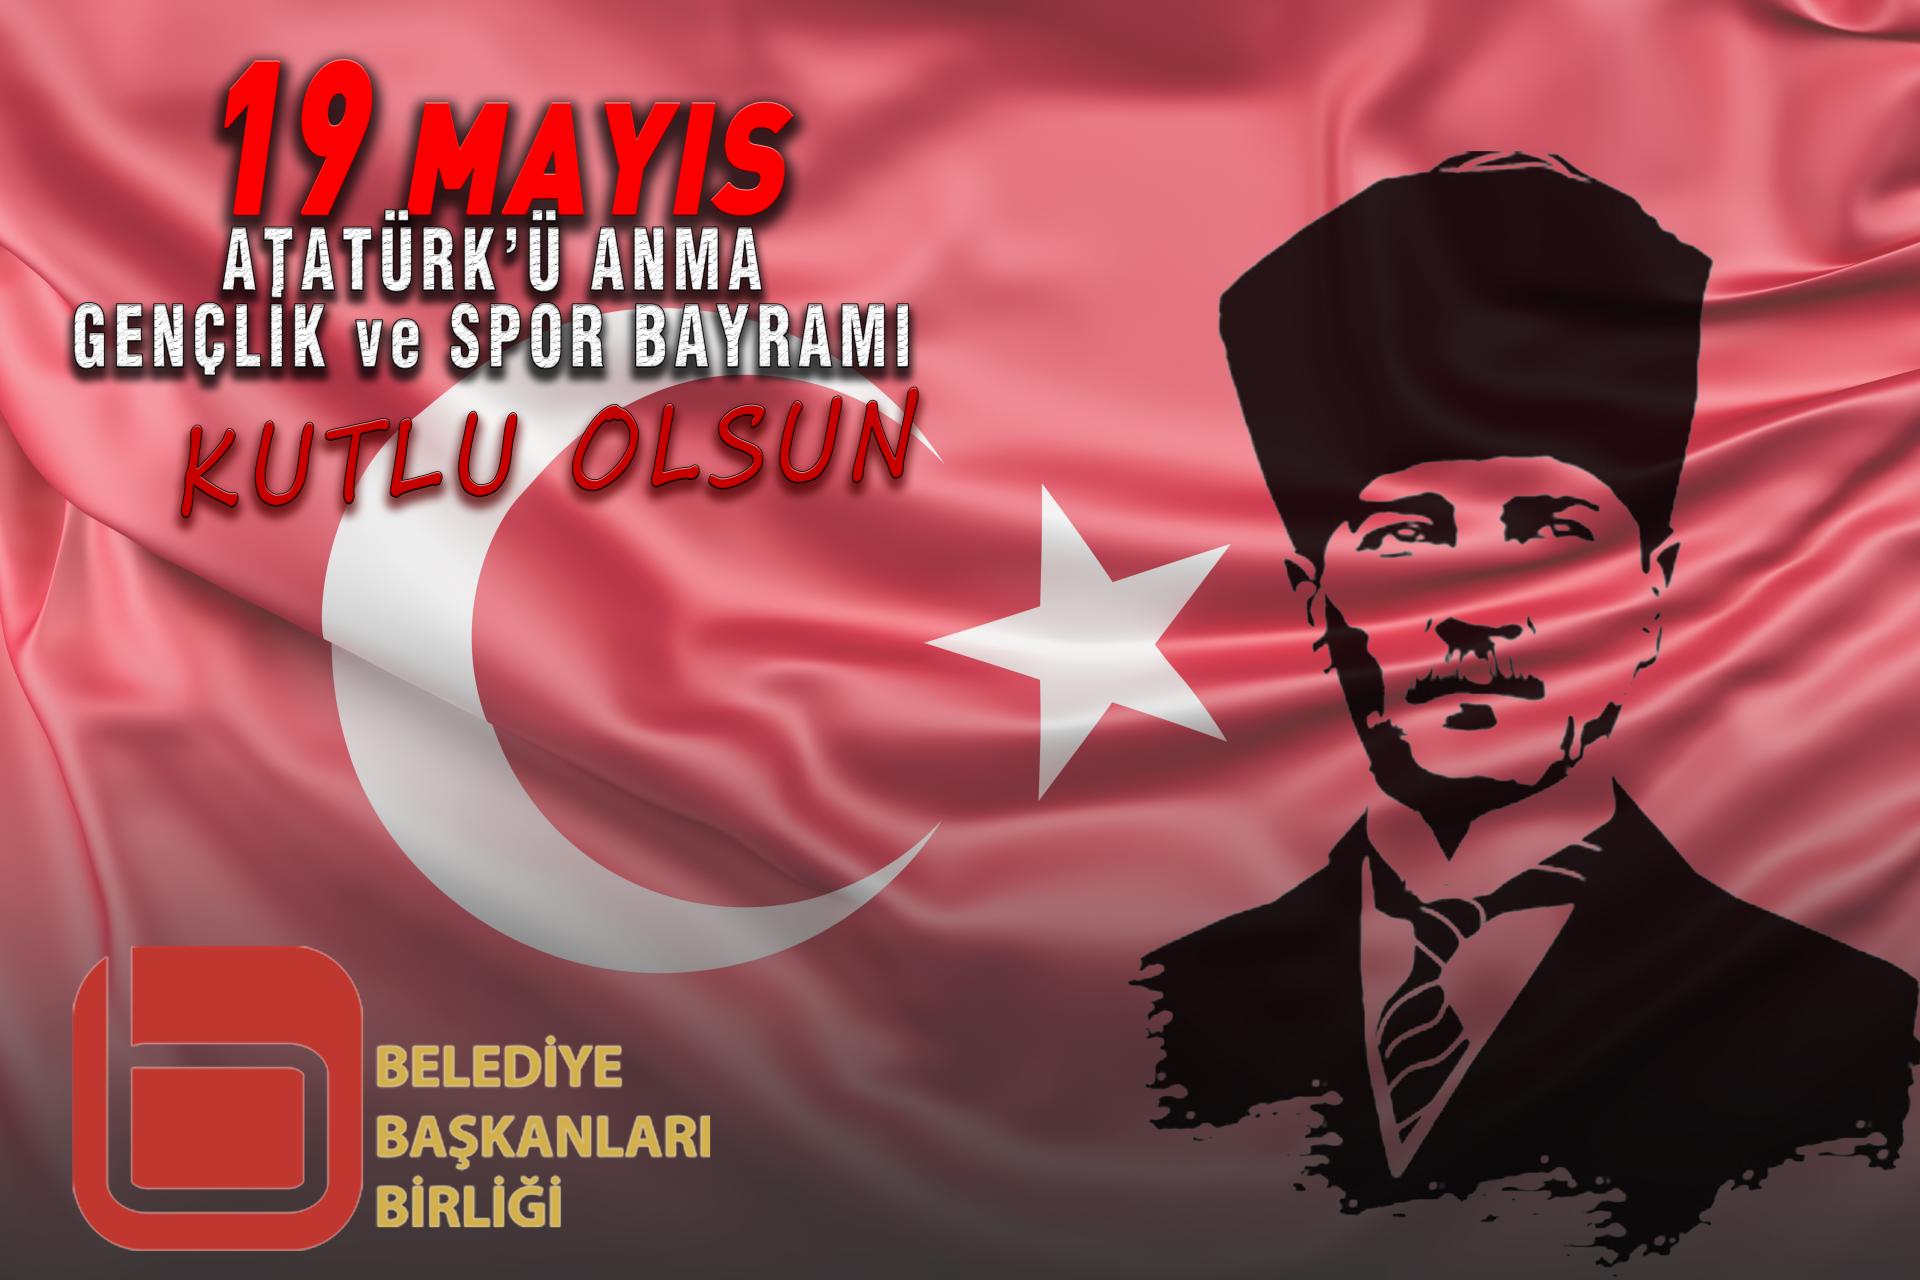 6215_5826_0914-flag-of-turkey-3036191_1.jpg